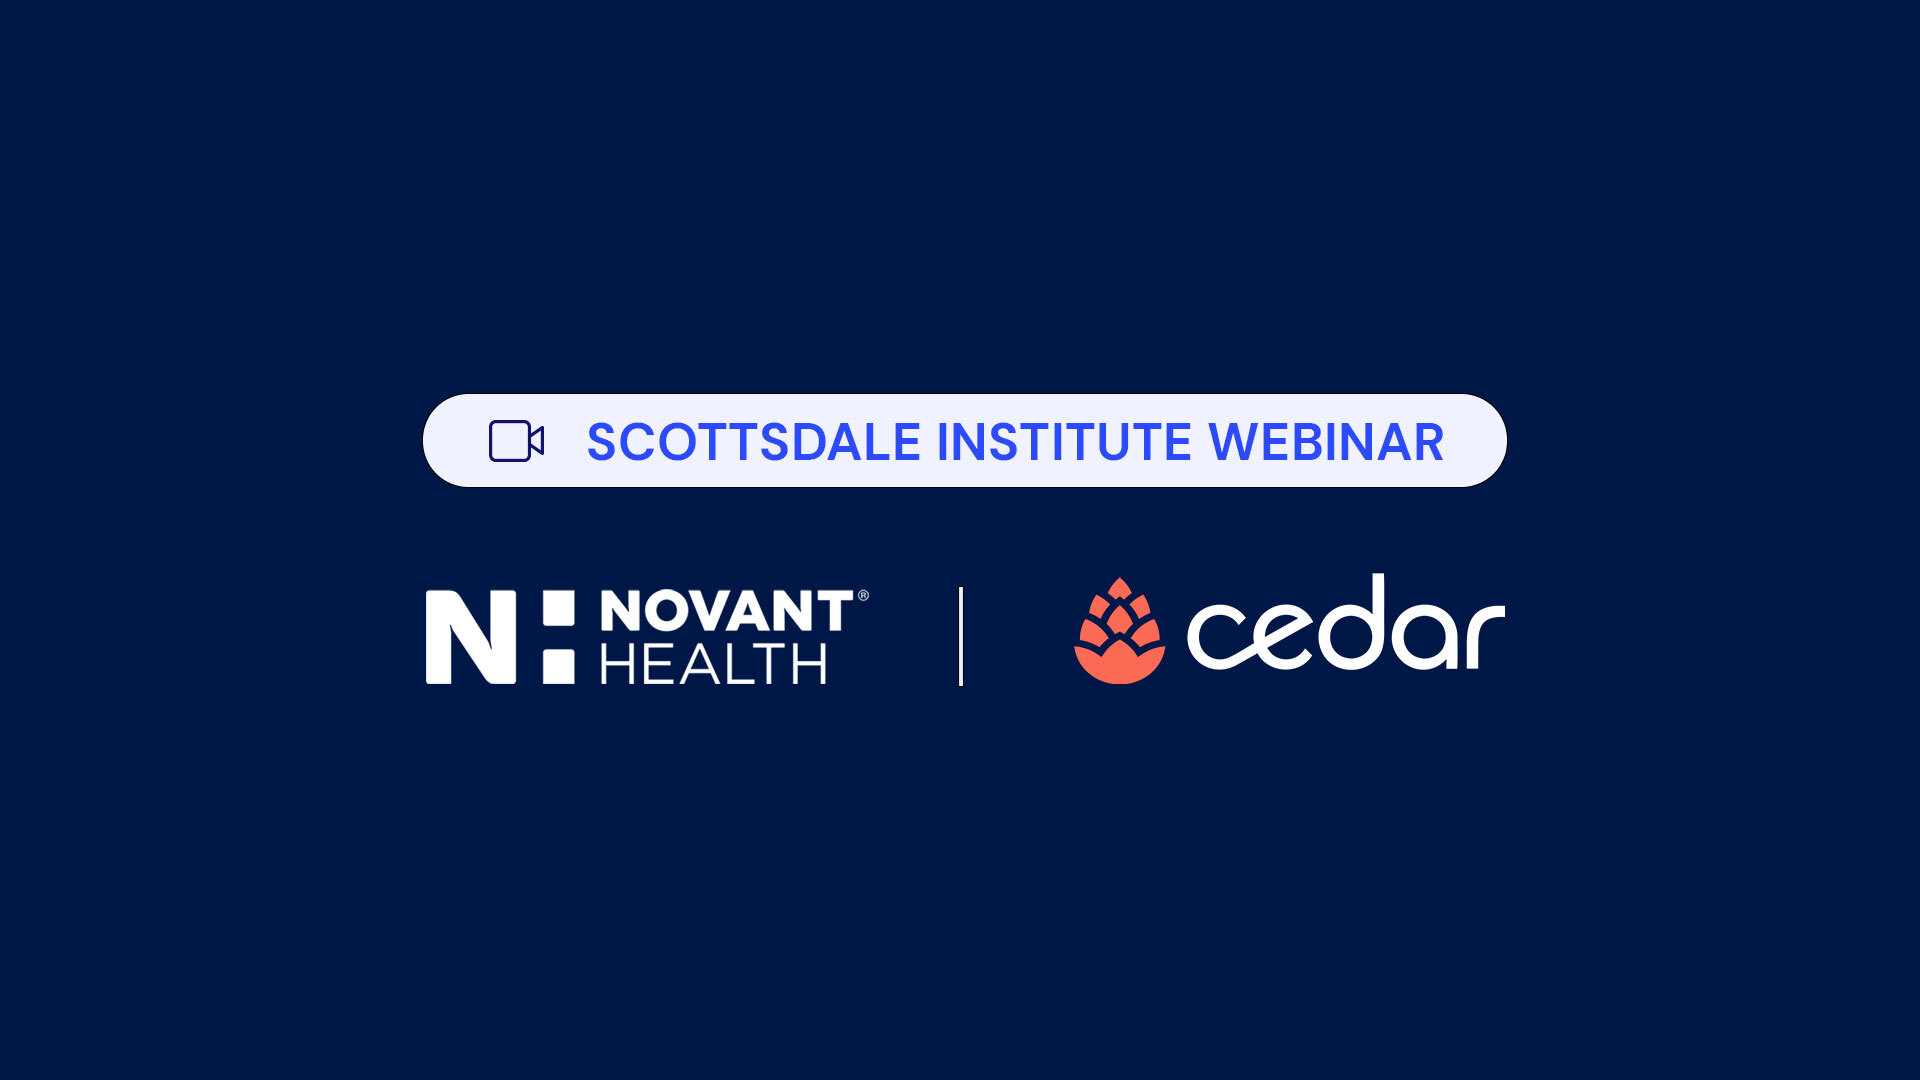 Scottsdale Institute Webinar Featuring Novant Health